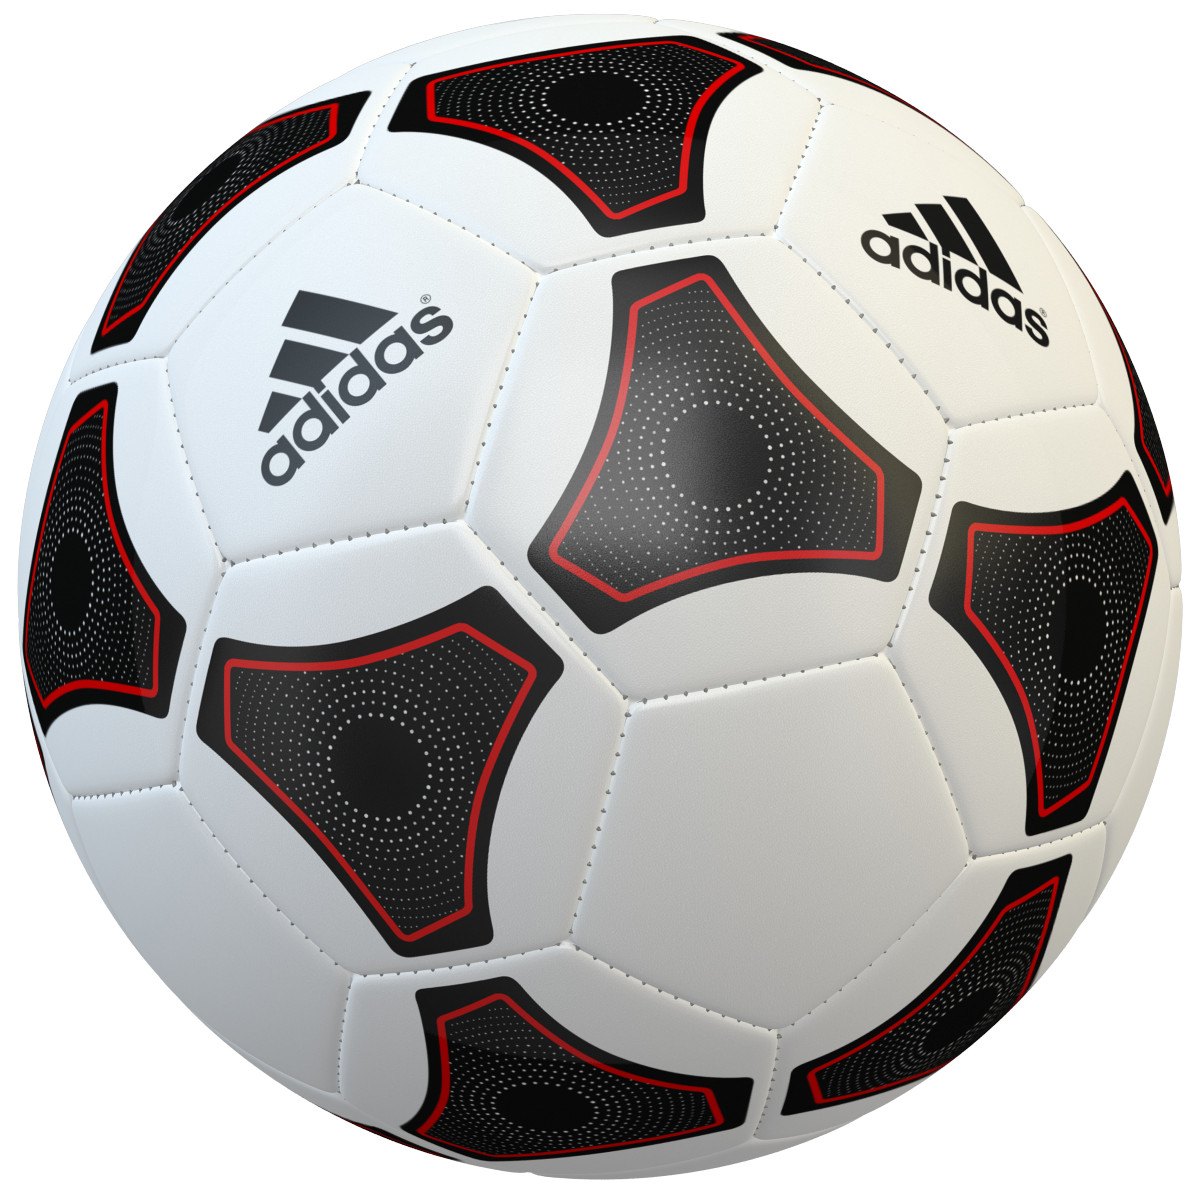 Футбол без мяча. Футбольный мяч адидас. 114504-3h мяч футбольный Soccer Ball Mini, Country foot Ball, красный. Мяч футбольный meik 131. Футбольный мяч без фона.